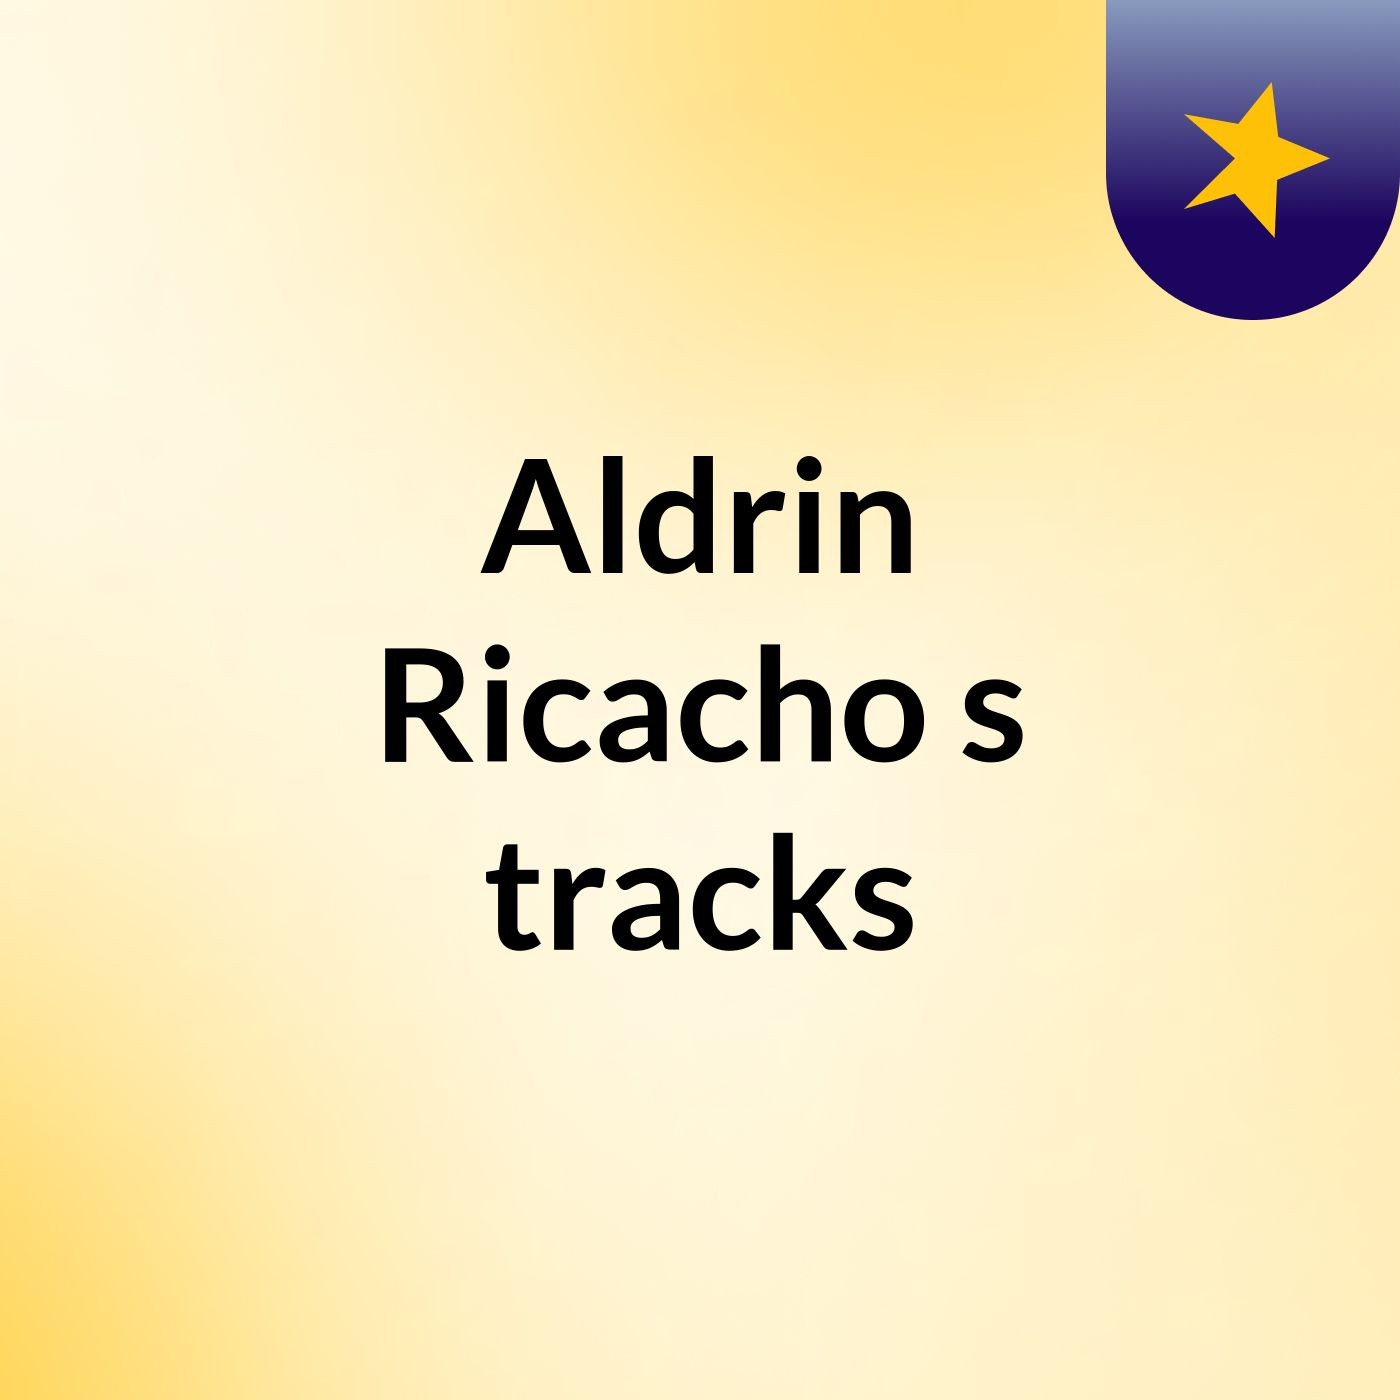 Aldrin Ricacho's tracks